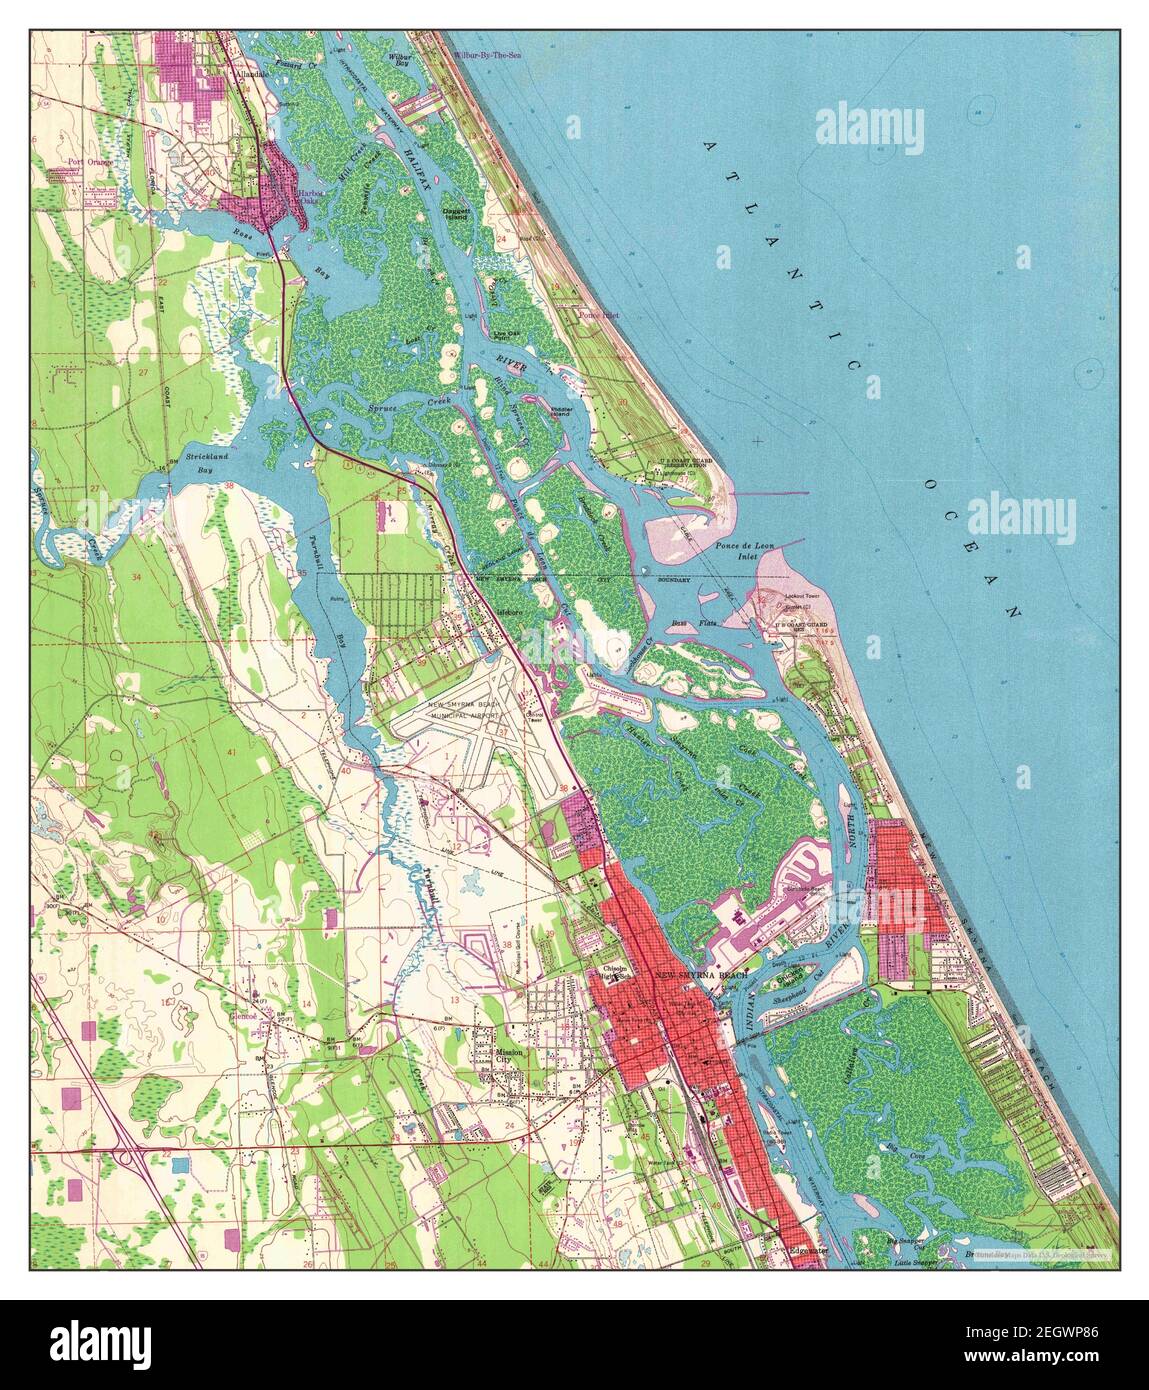 New Smyrna Beach Florida Map 1956 1 United States Of America By Timeless Maps Data U S Geological Survey Stock Photo Alamy